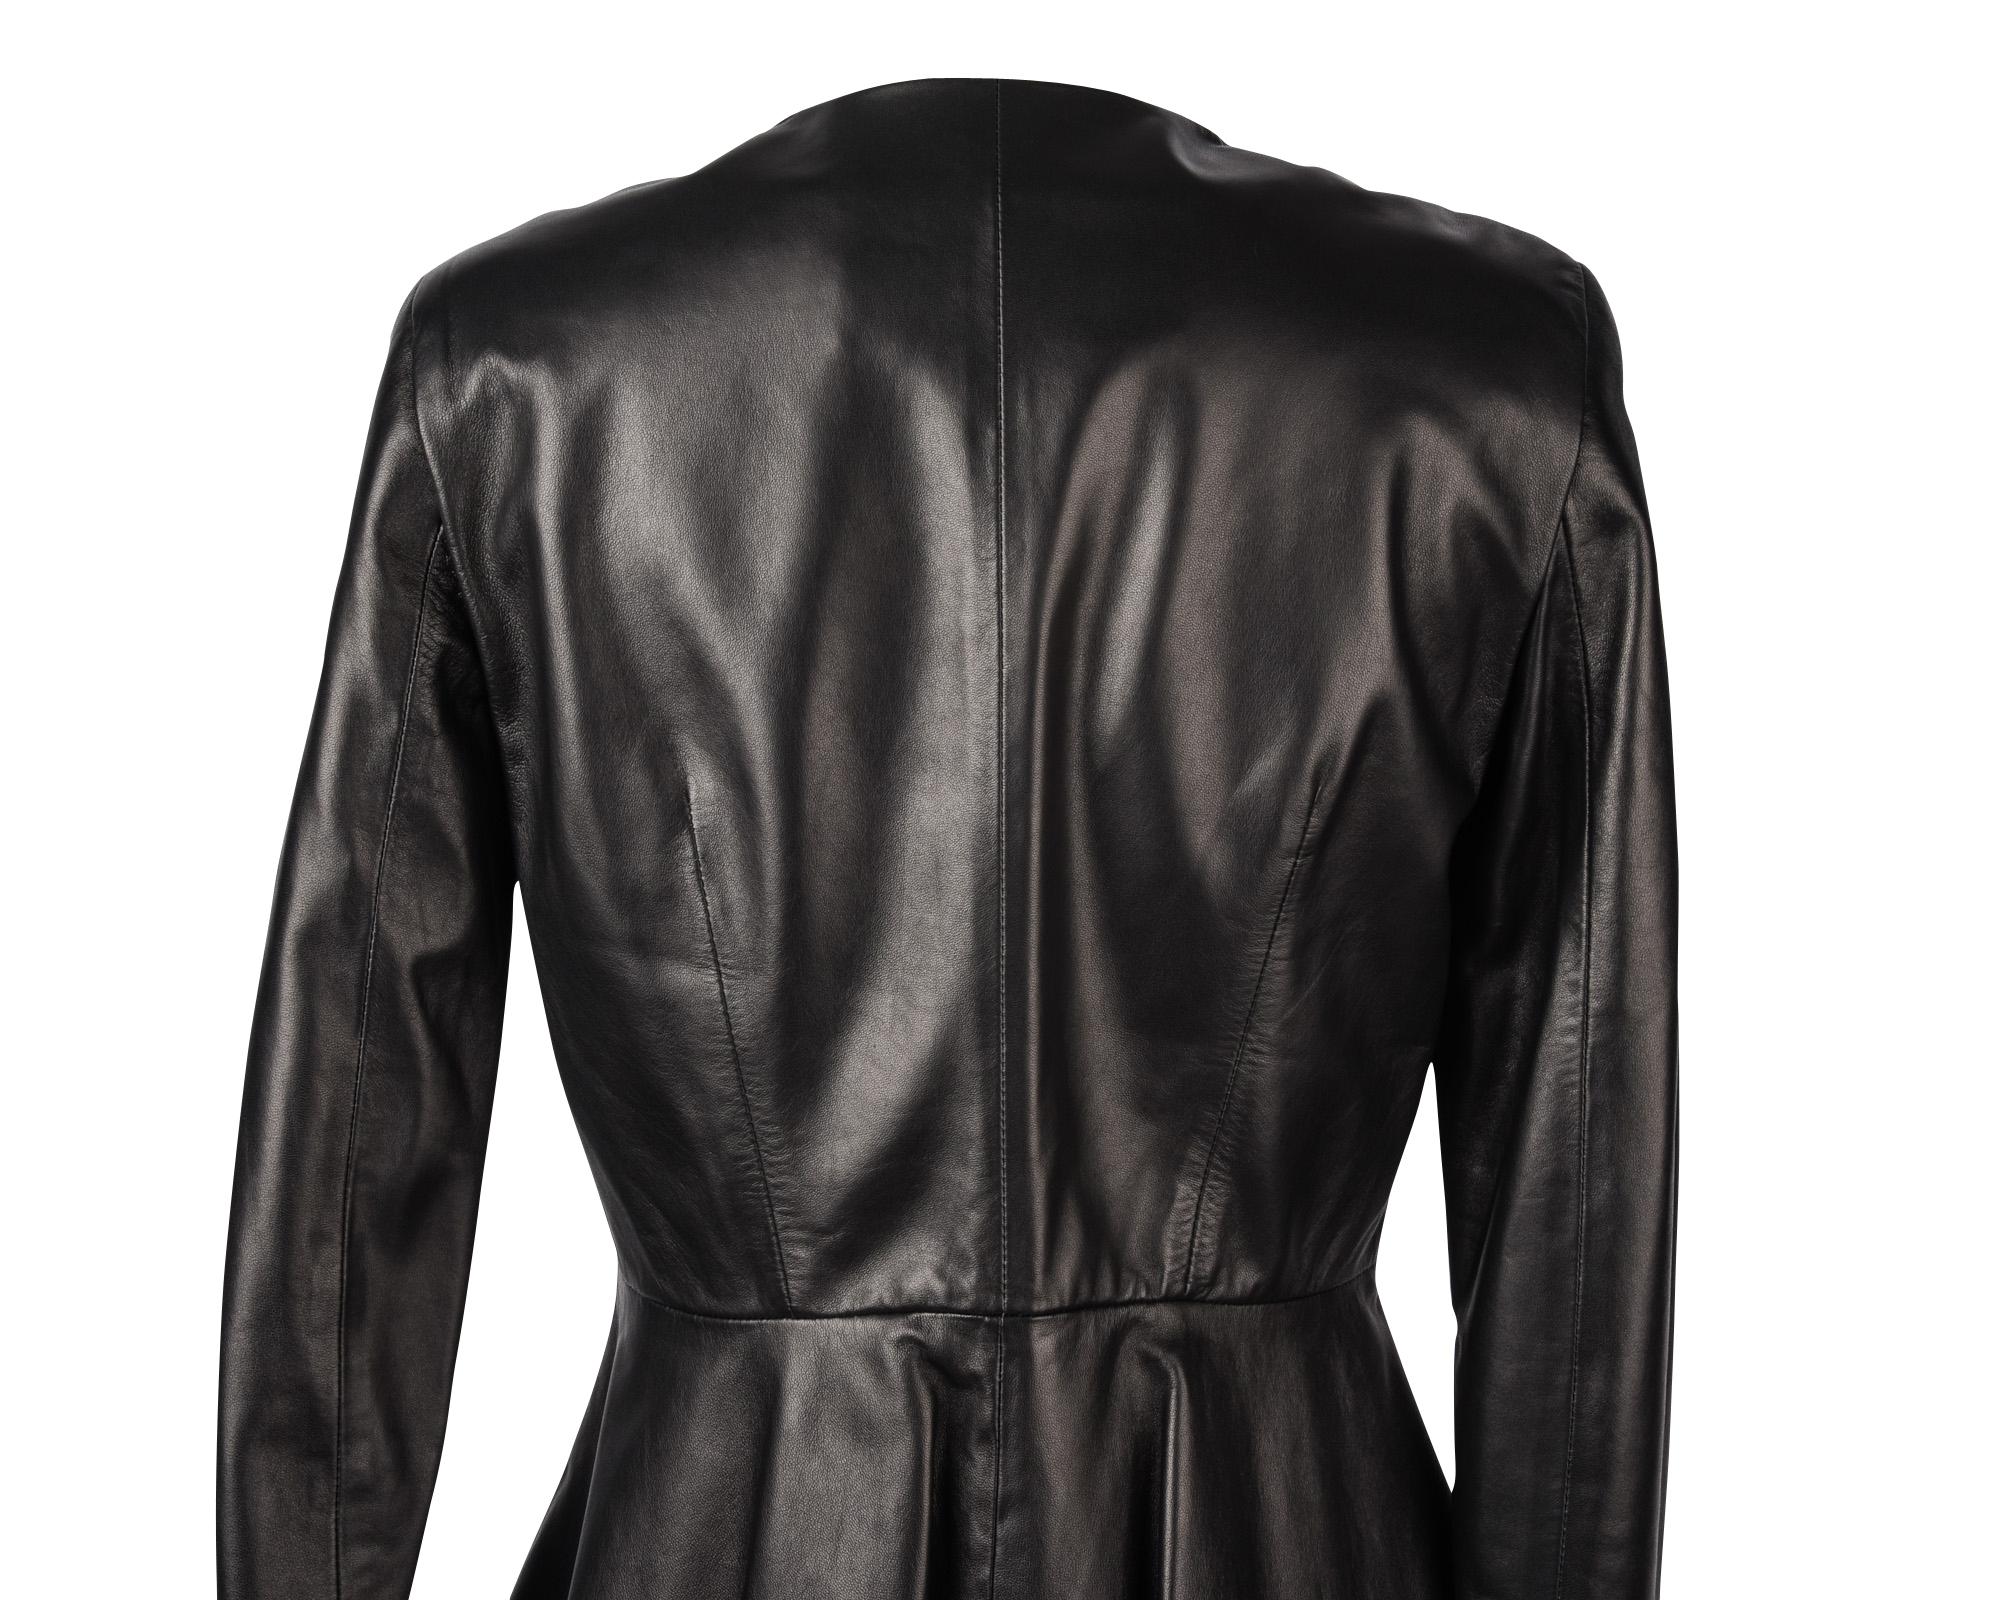 Carolina Herrera Jacket Peplum Black Lambskin Leather Feather Light 8 mint 2